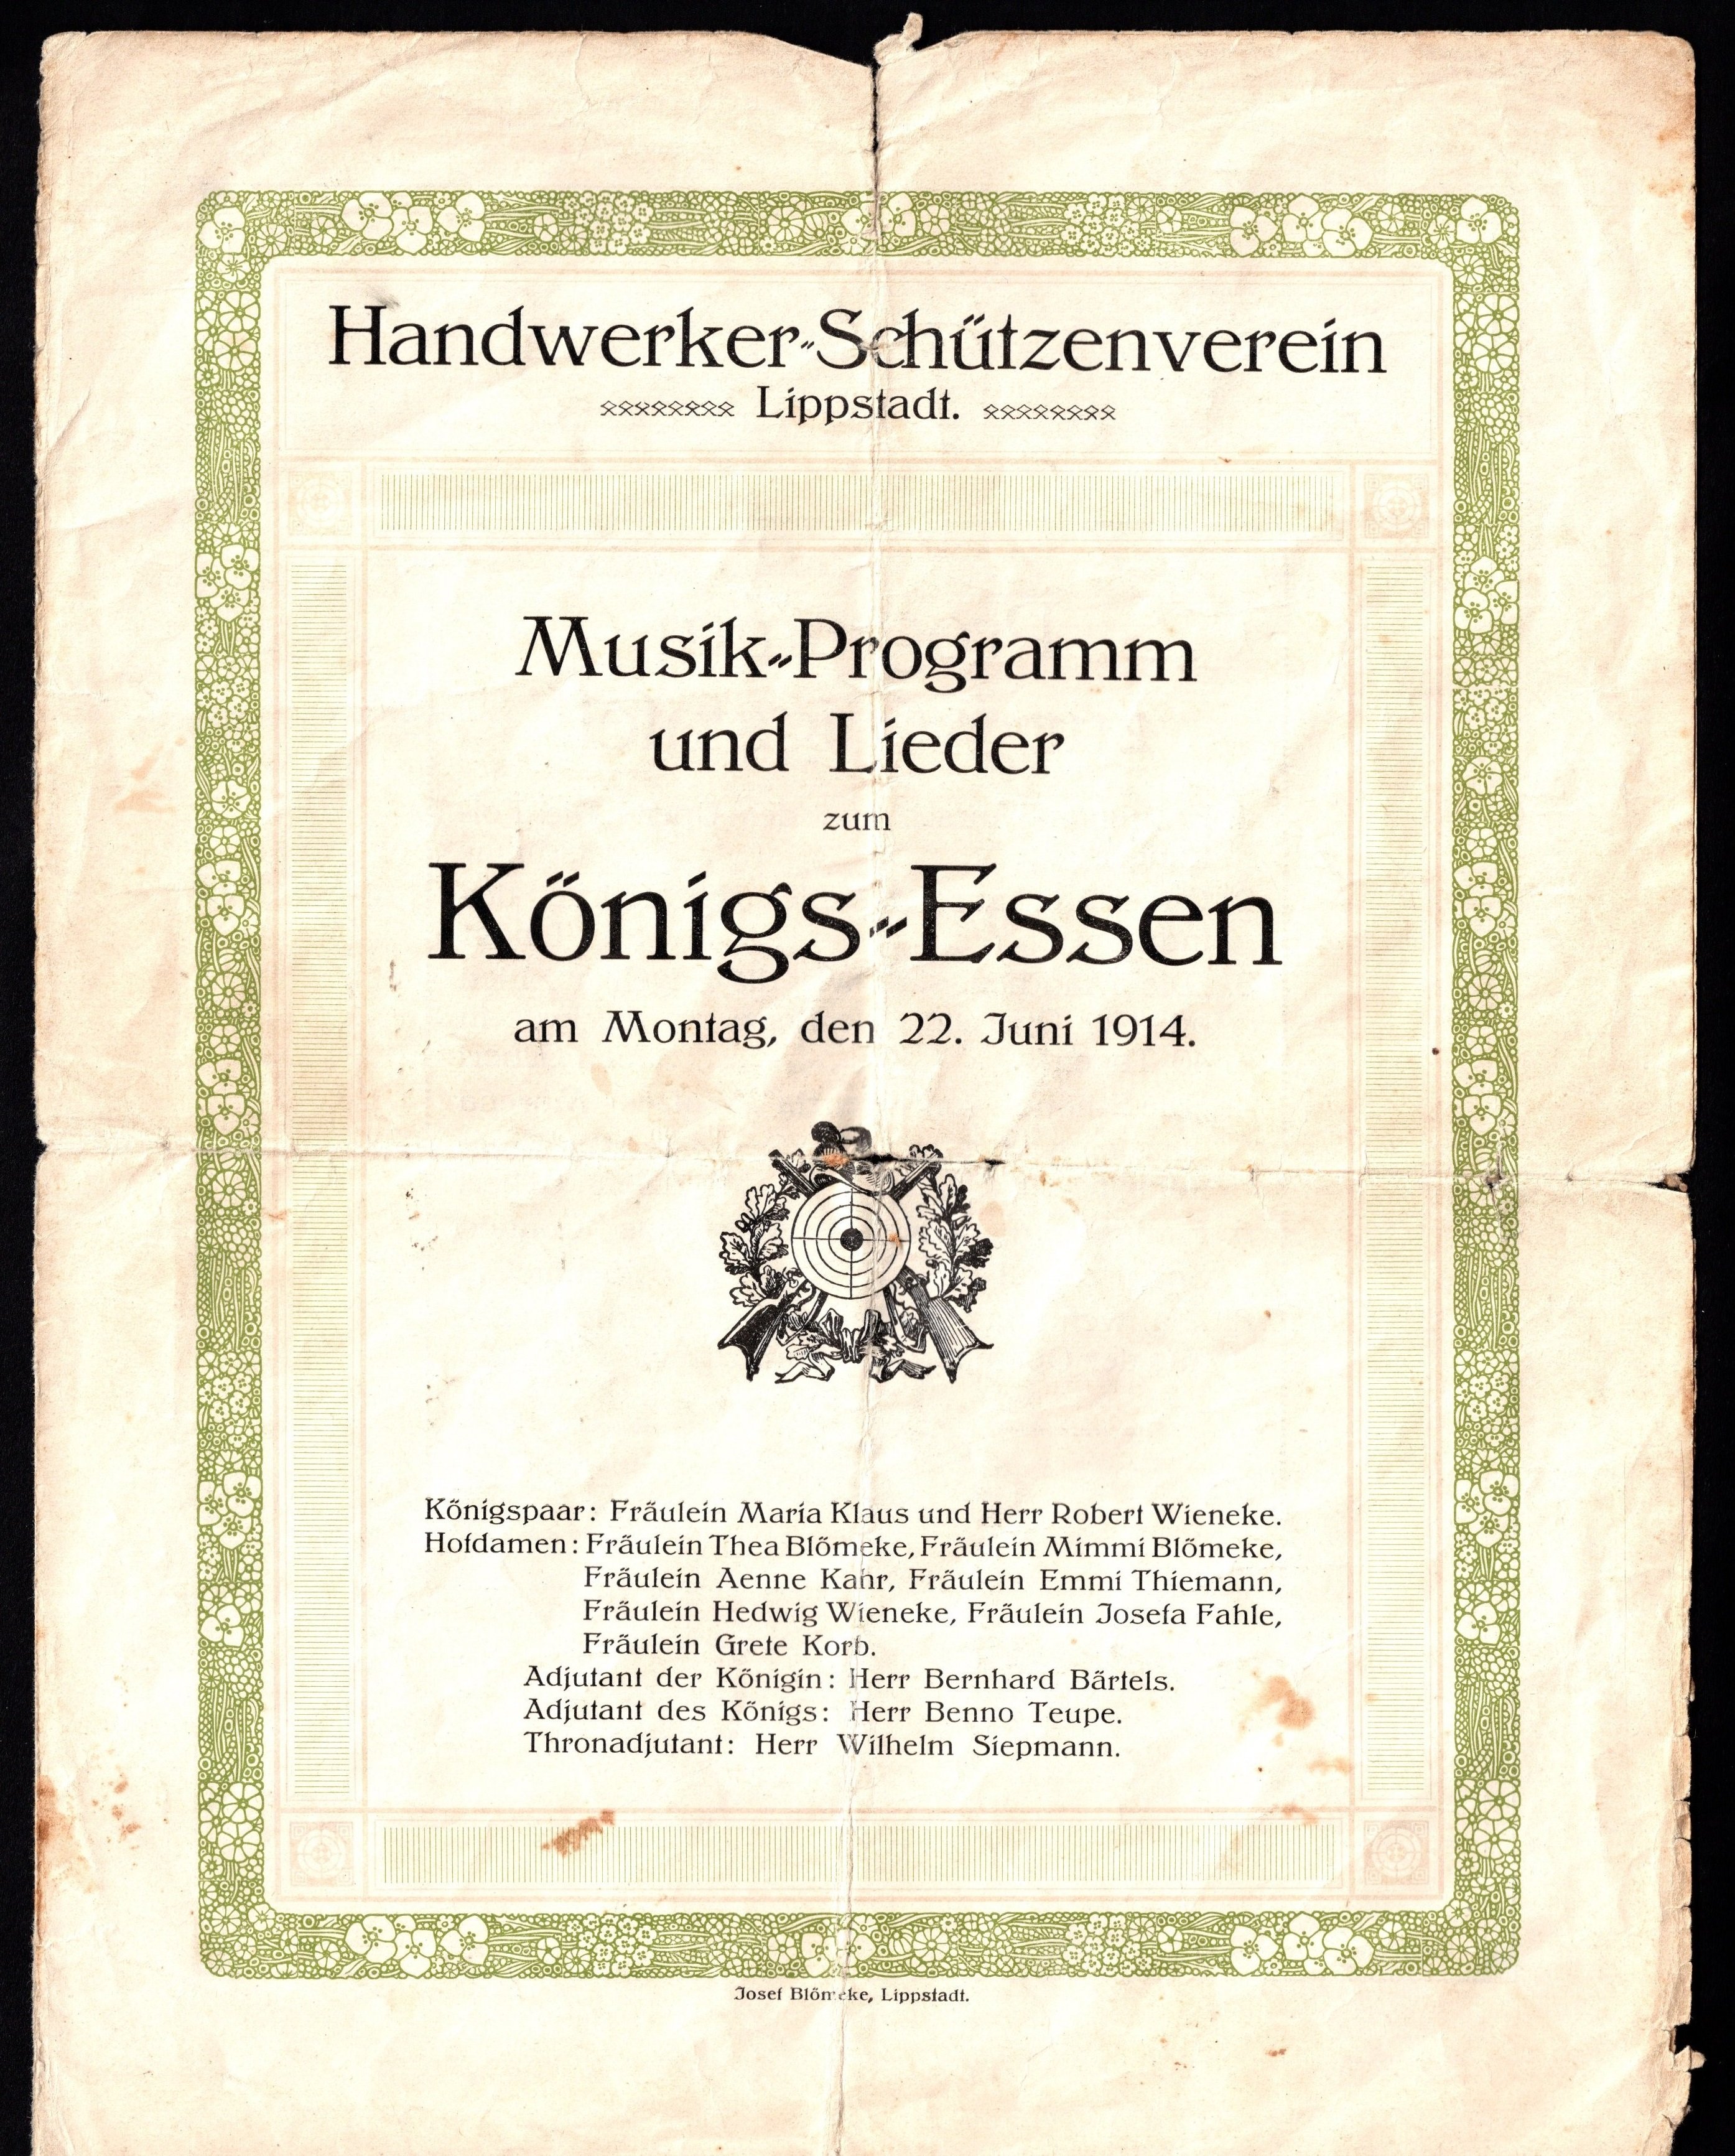 Programmheft zum Schützenfest des Handwerker Schützenvereins 1914 (Stadtmuseum Lippstadt CC BY-NC-ND)